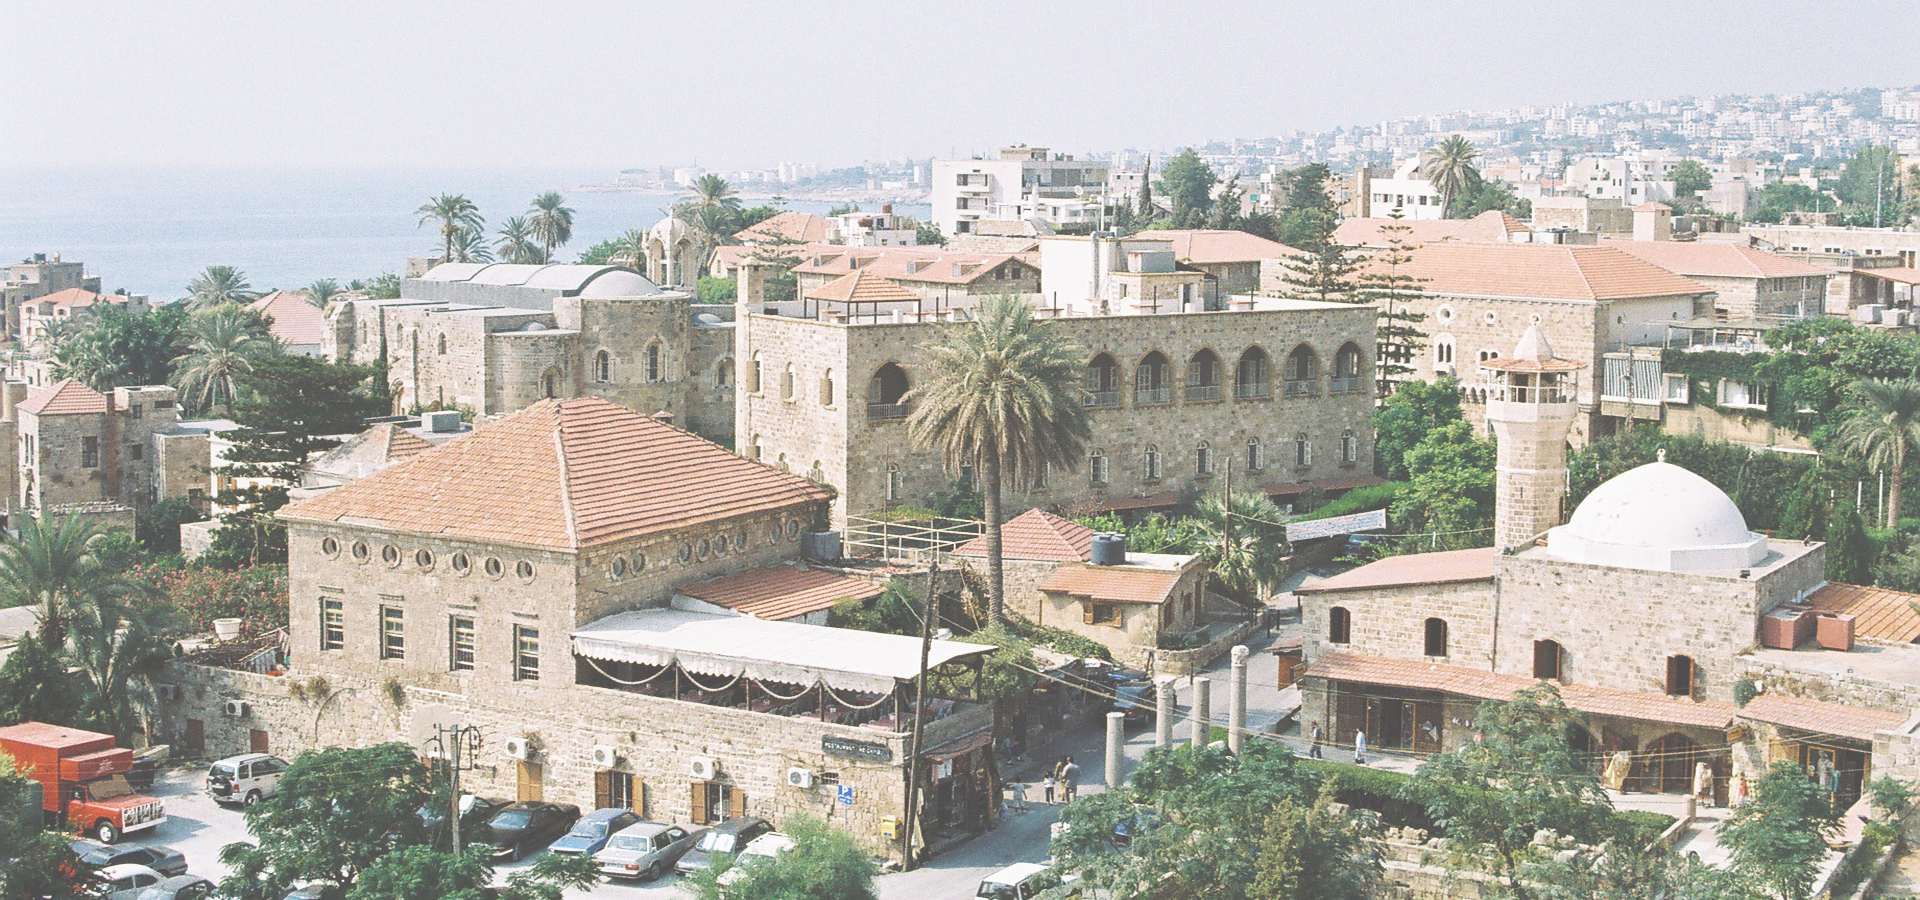 <b>Byblos, Keserwan-Jbeil Governorate, Lebanon</b>